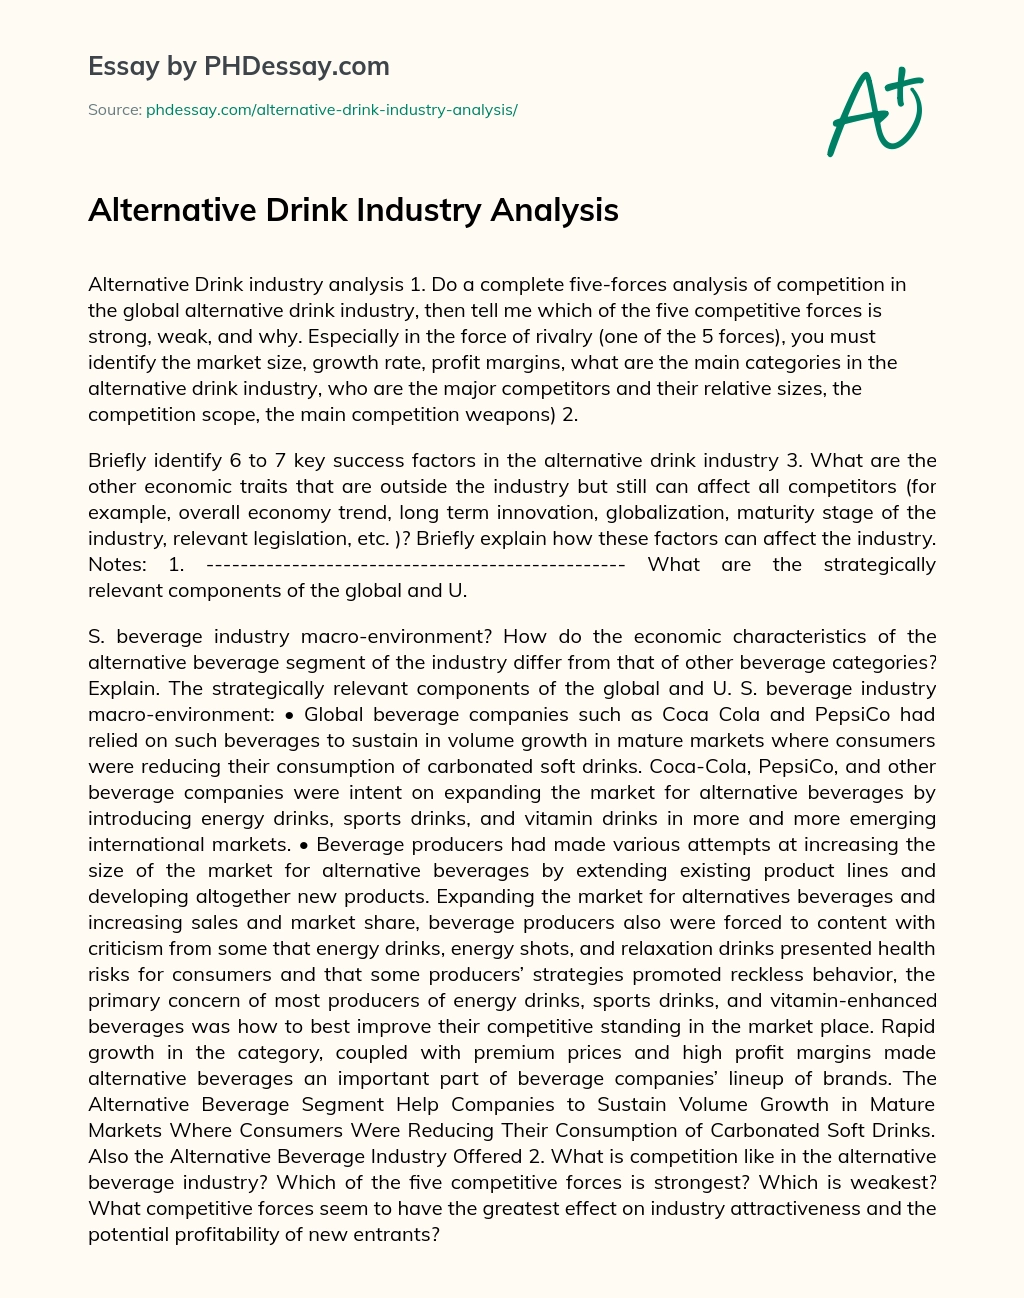 Alternative Drink Industry Analysis essay